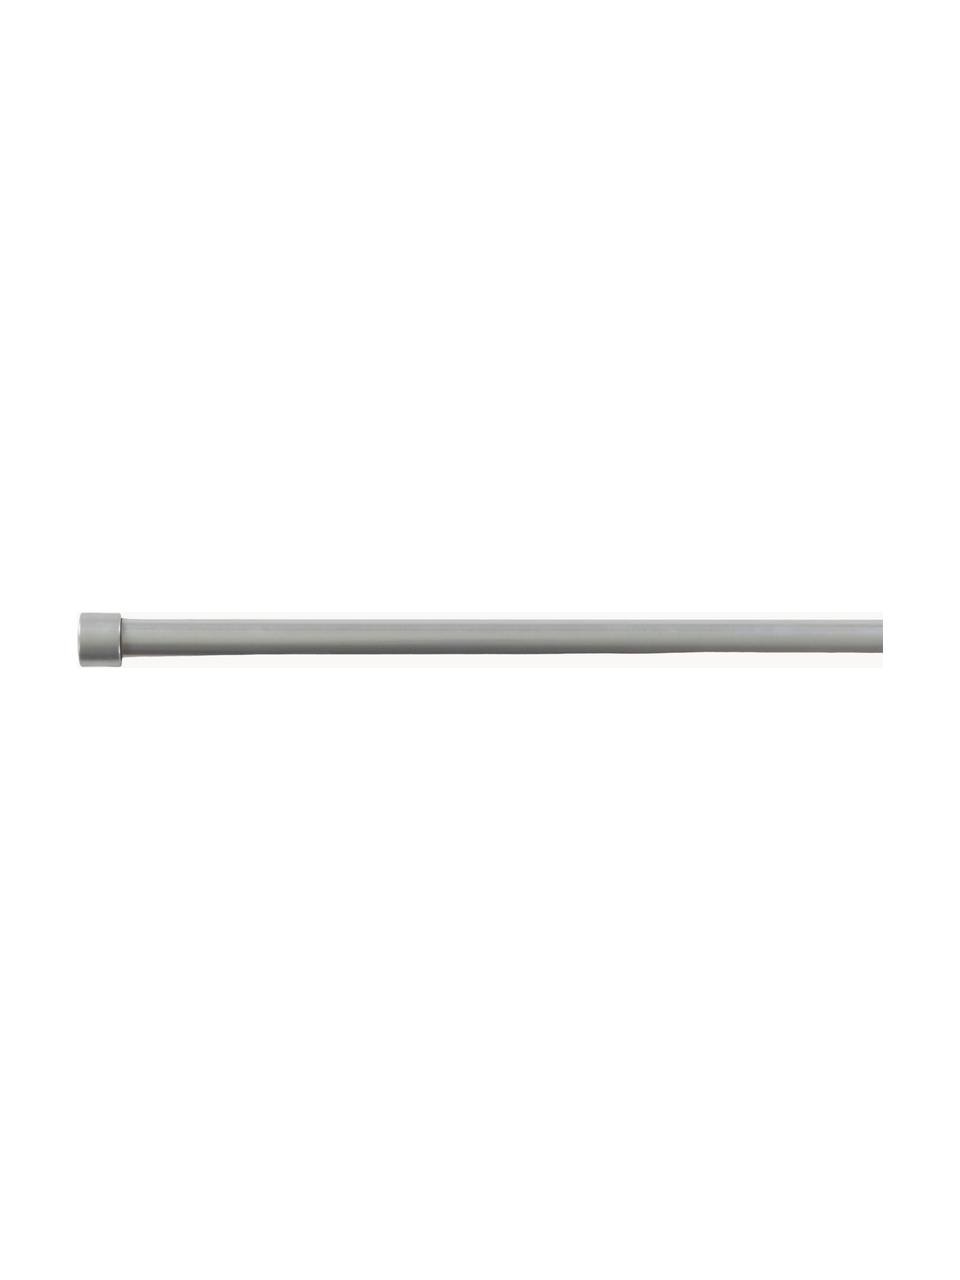 Záclonová tyč Basic, Š 67-180 cm, Potažený kov, Stříbrná, Š 67-180 cm, V 3 cm